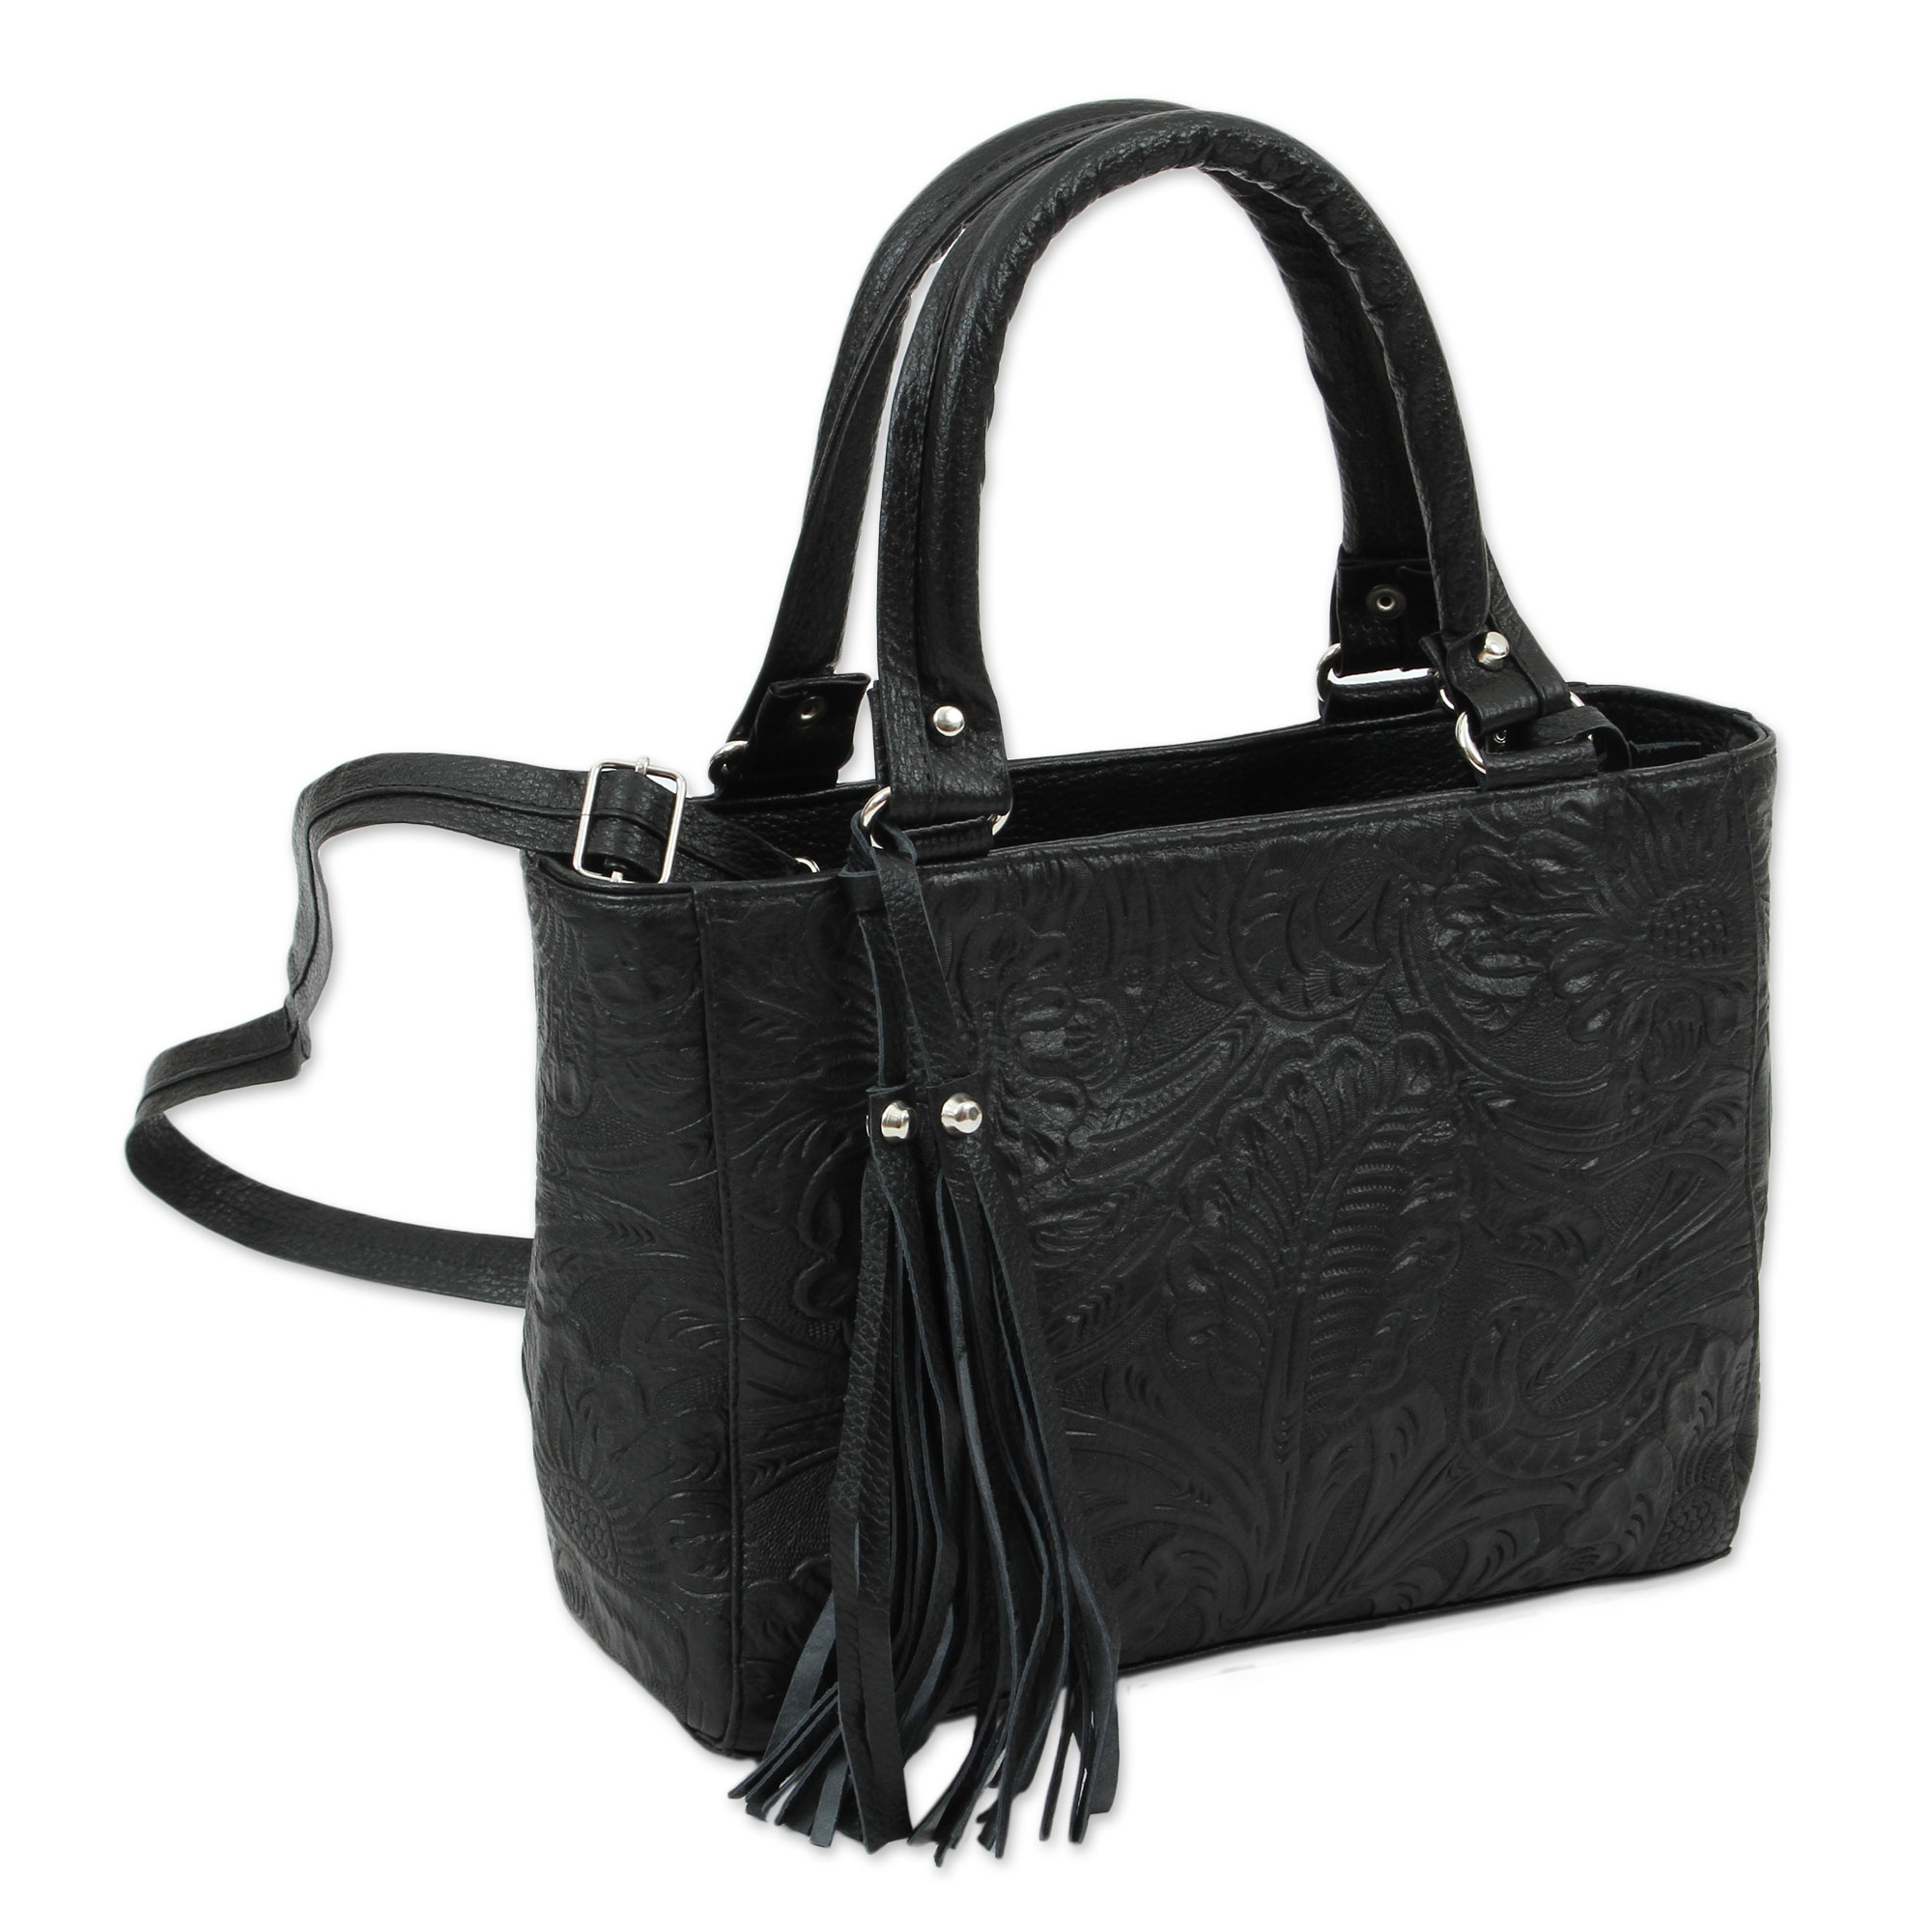 Floral Embossed Leather Shoulder Bag in Black from Mexico, 'Flower Carrier  in Black